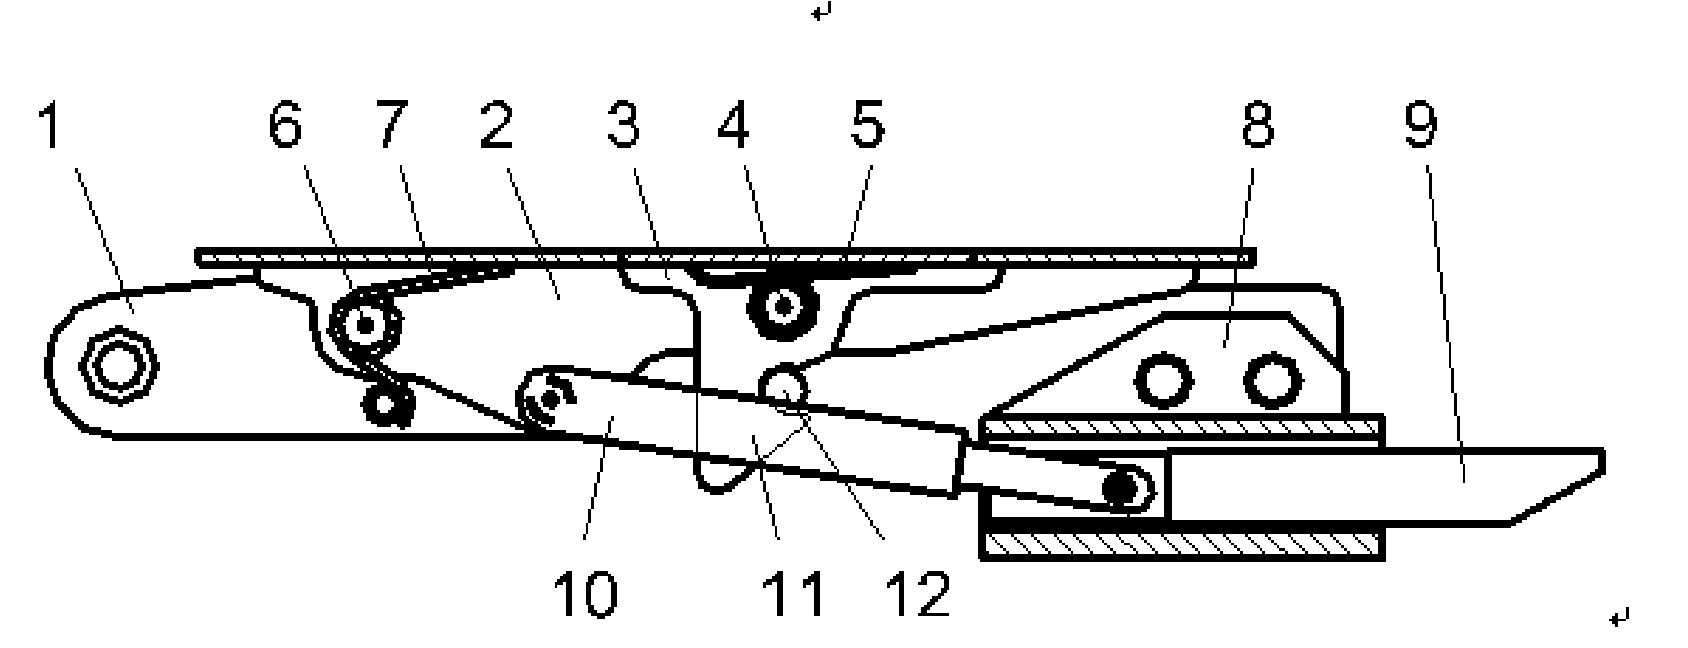 Rapid demounting method for cabin door of aeroengine and a latch lock